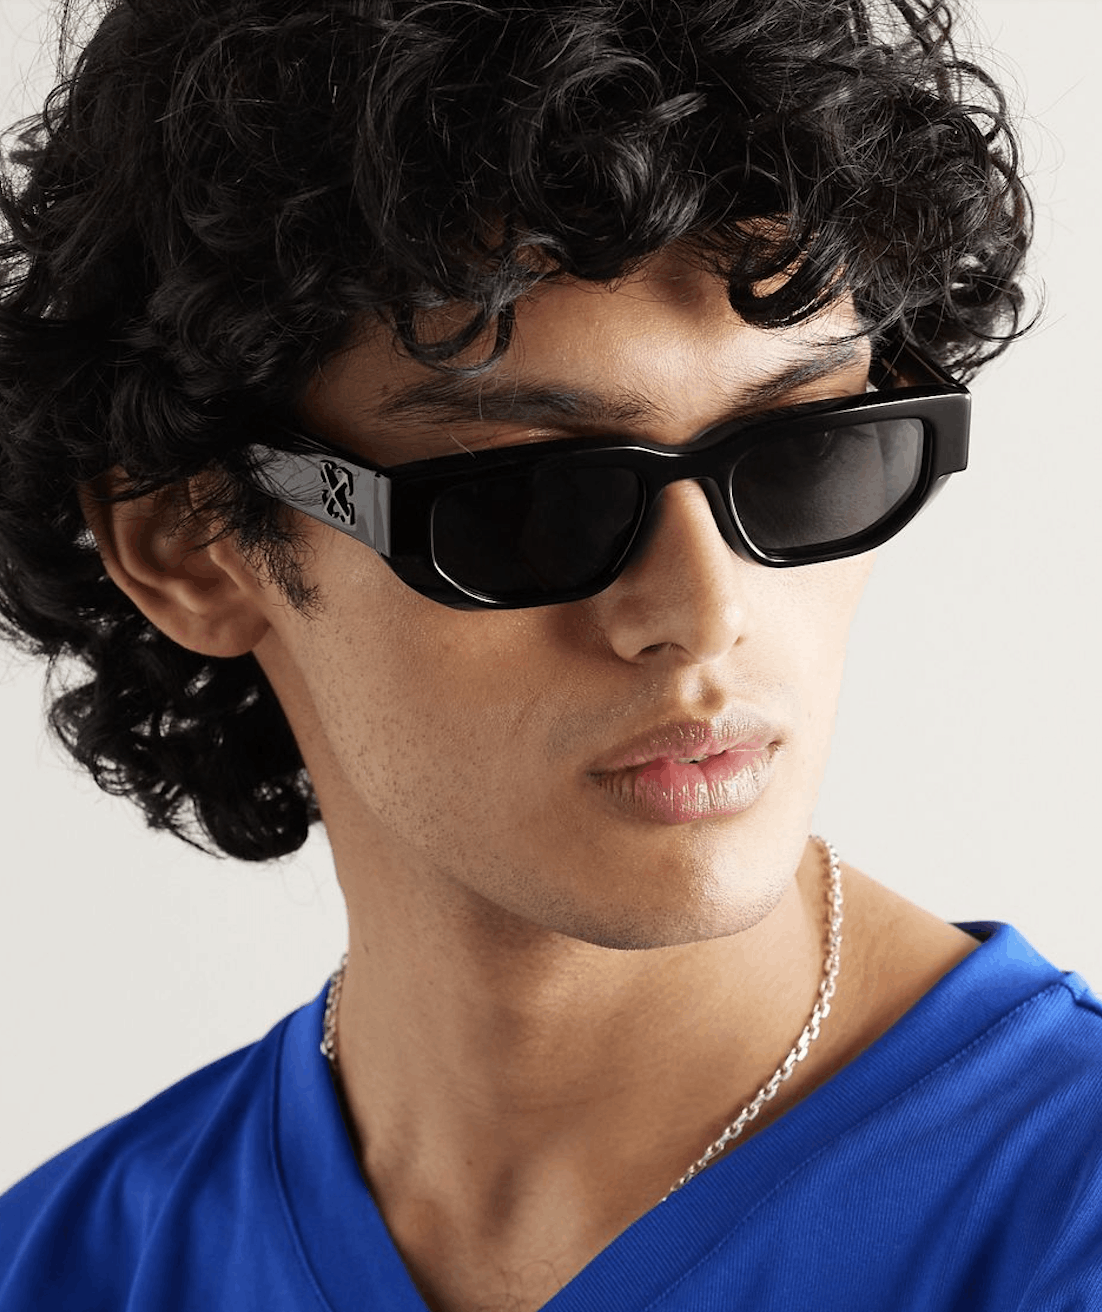 Off-White Black Greeley Sunglasses